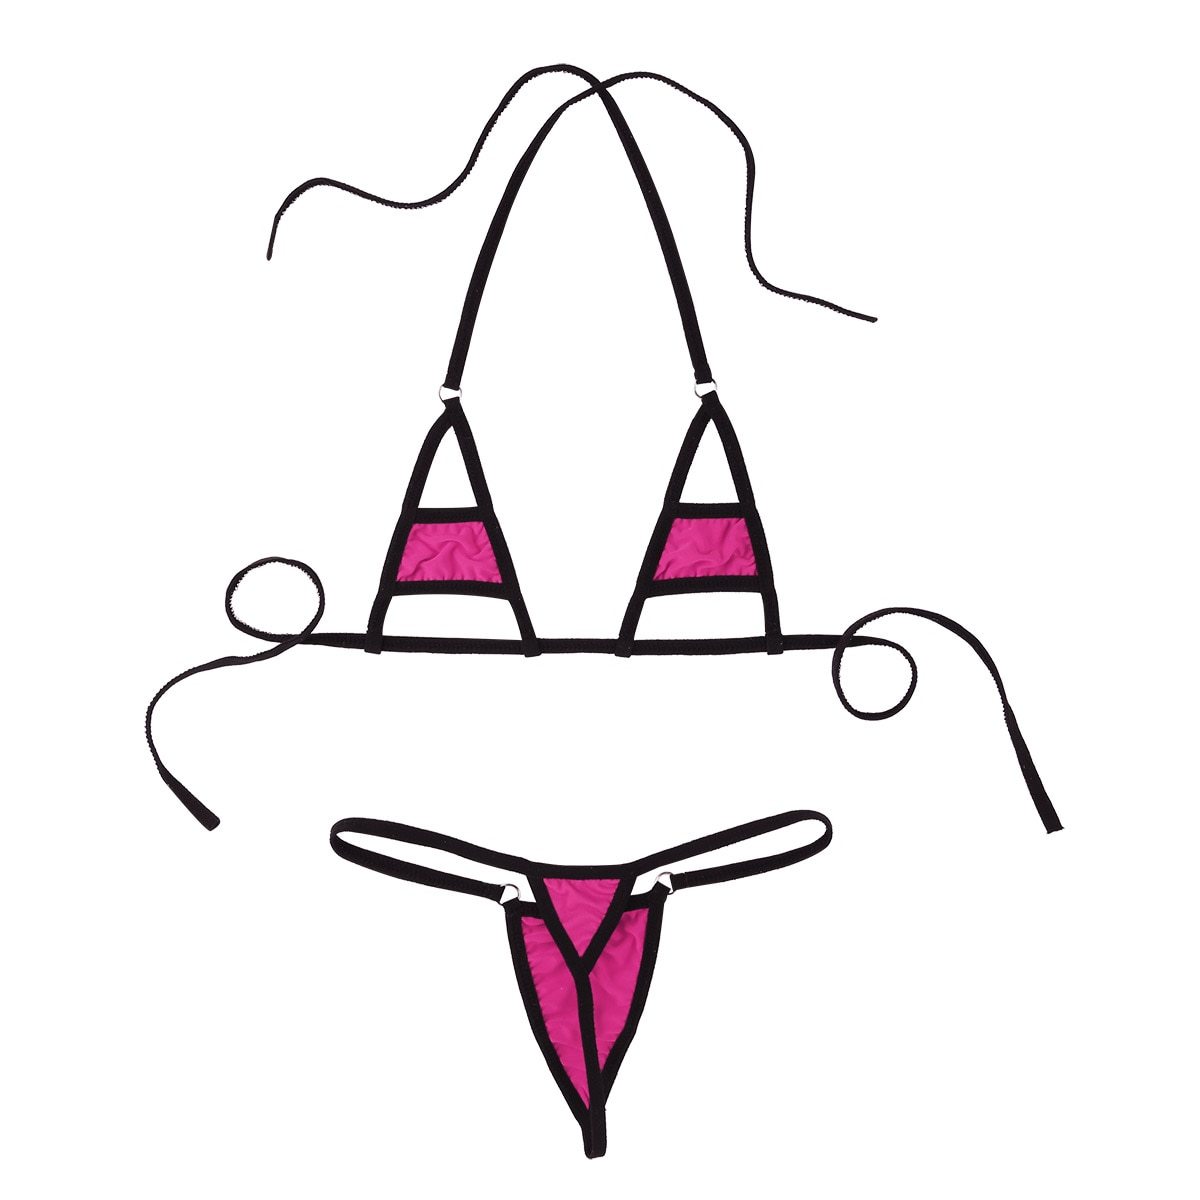 Sexy Women Underwear / Lingerie Set / Micro Bikini Bra Top with Briefs Bottoms - HARD'N'HEAVY